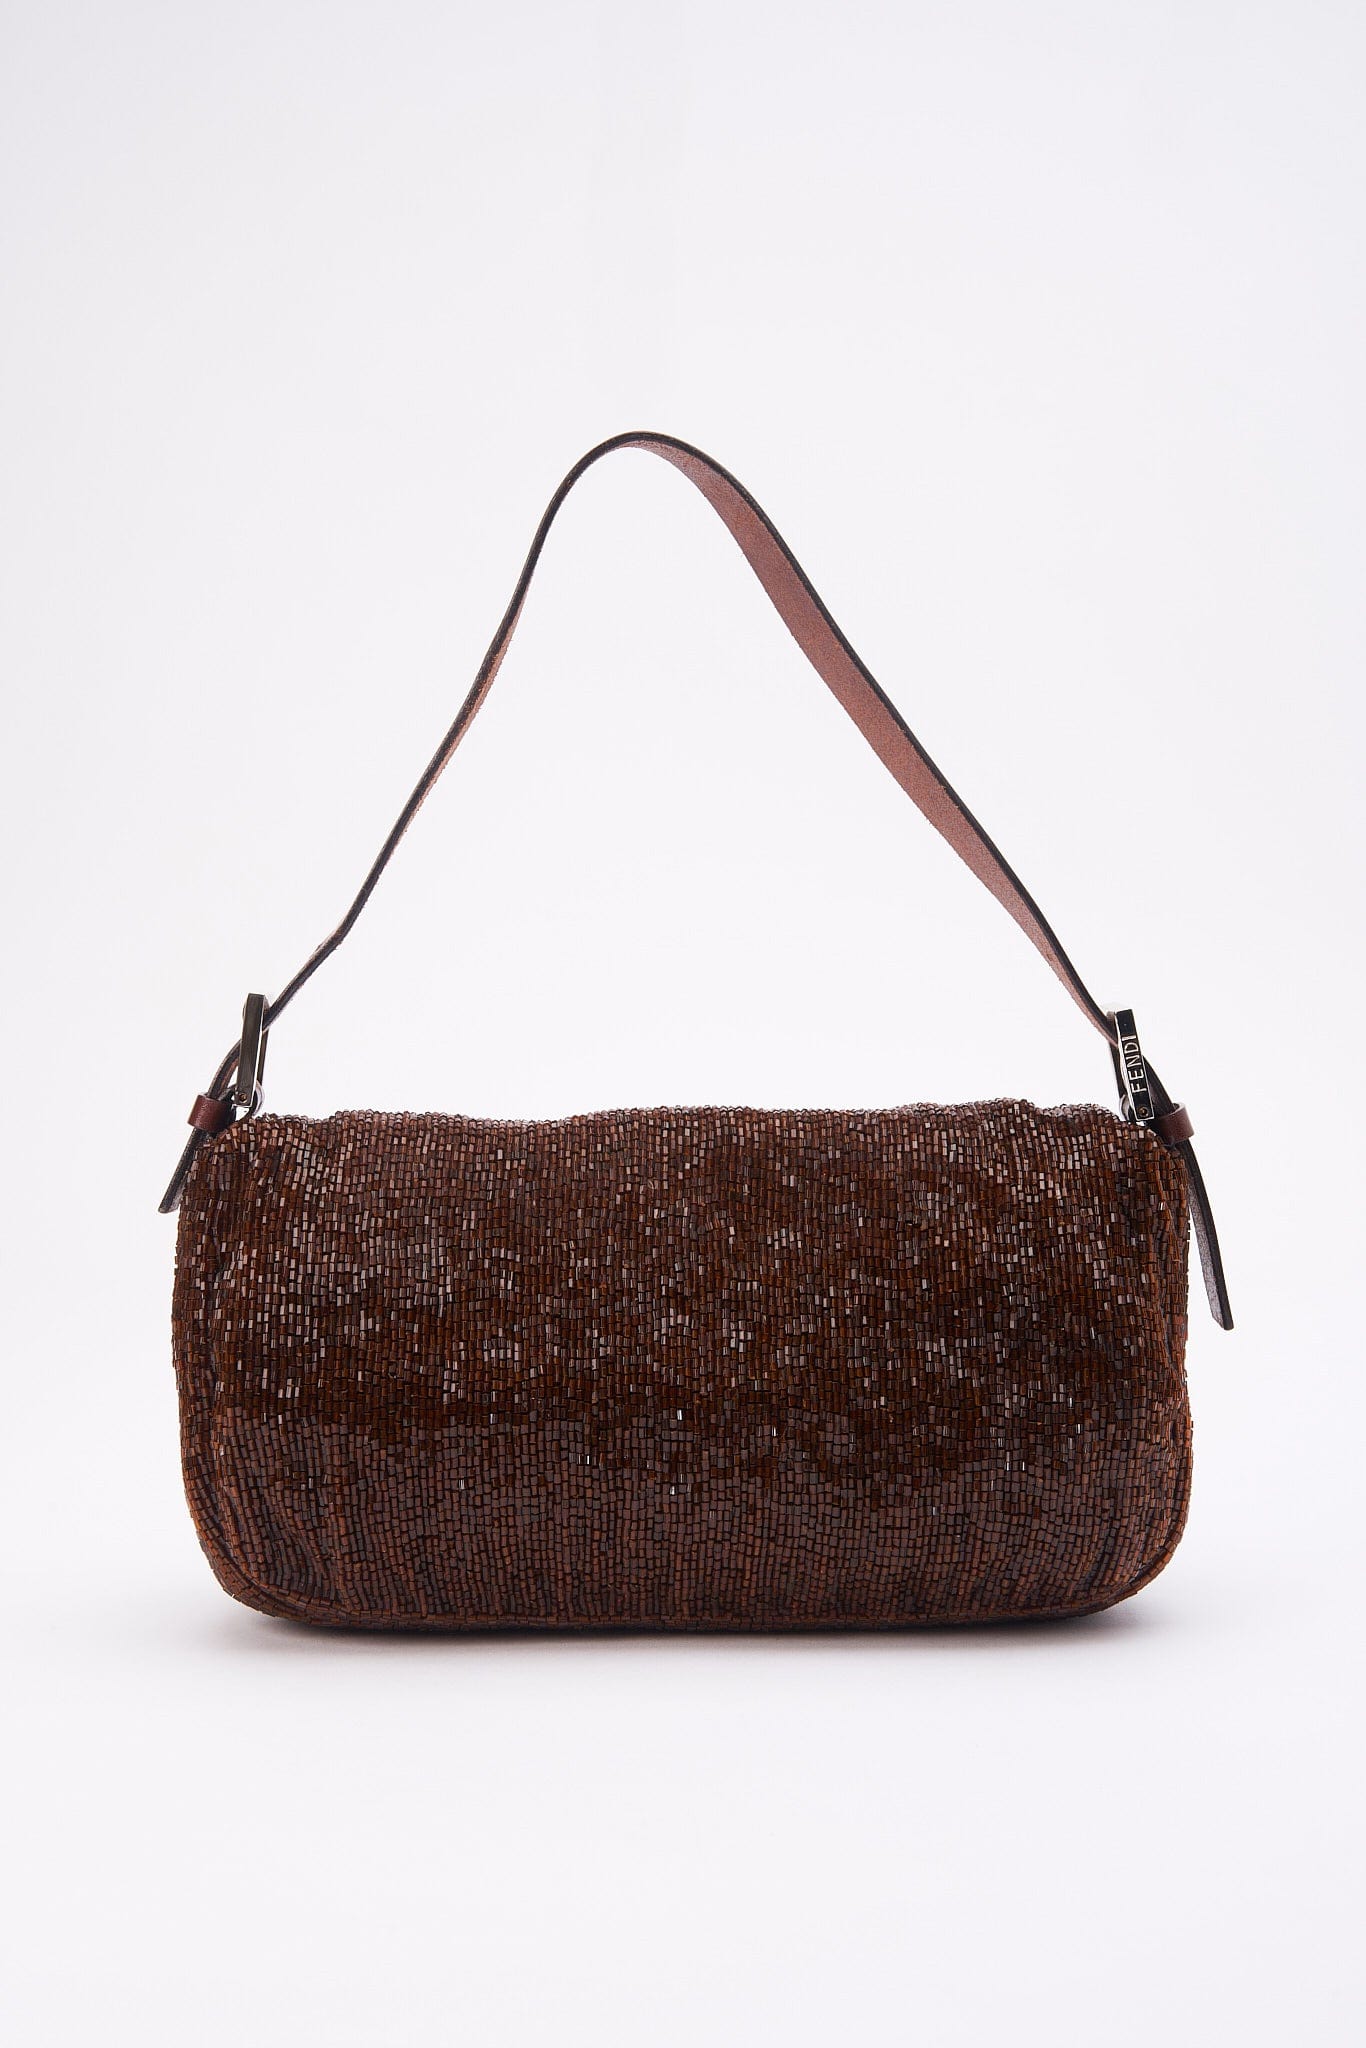 Fendi Brown Sequin Beaded Baguette Bag